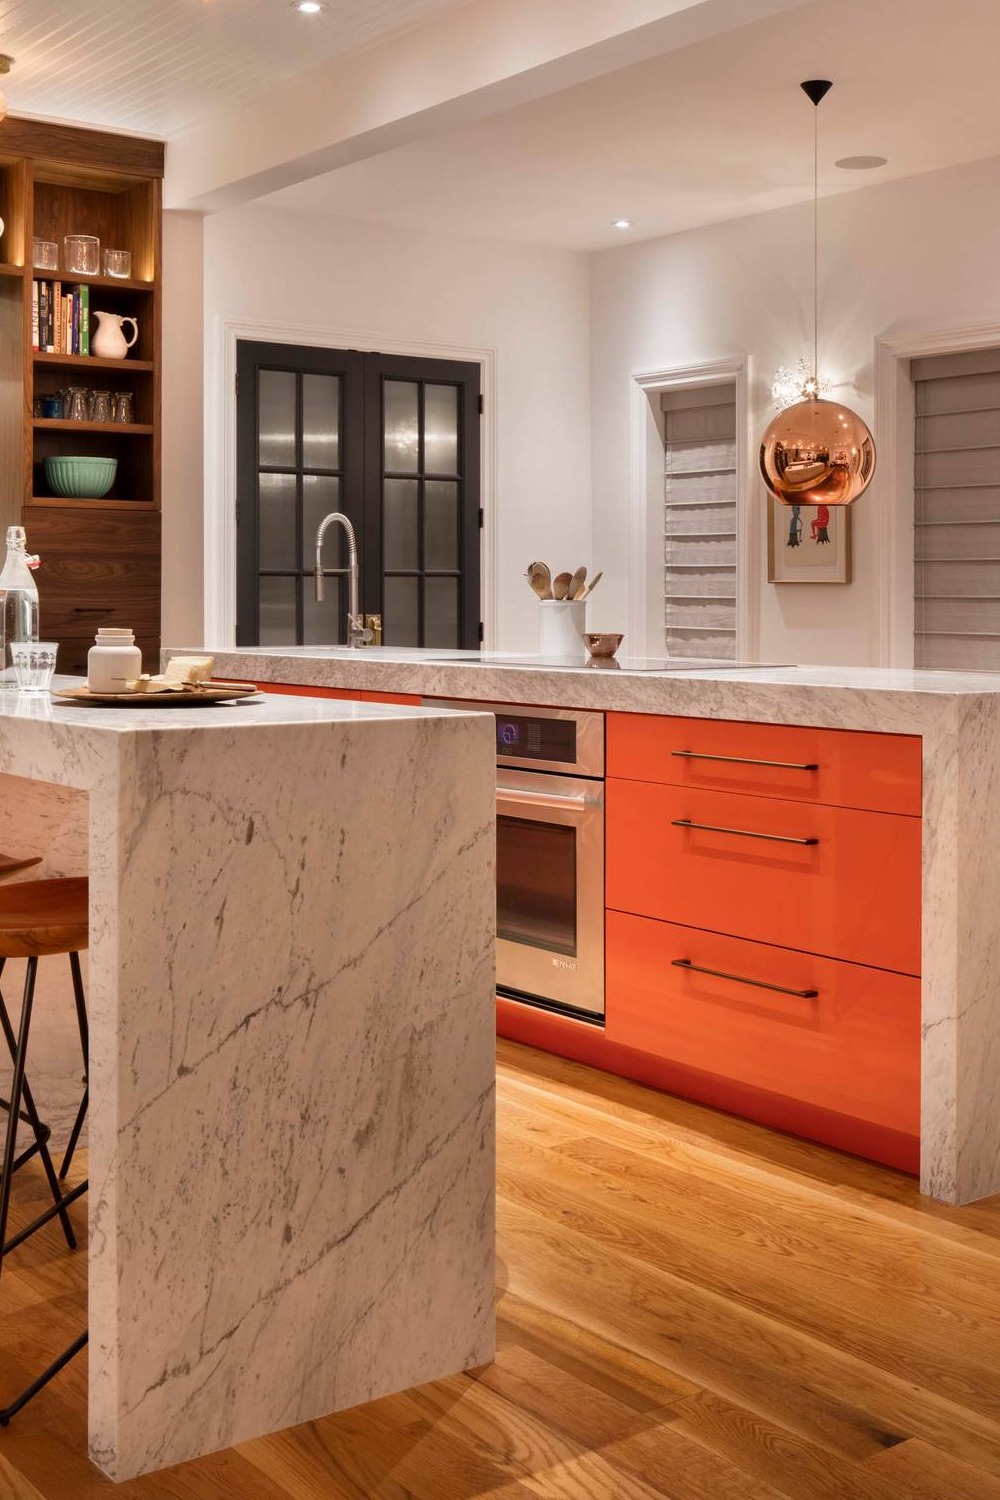 Flat Panel Orange Cabinets Marble Counters Medium Tone Wood Flooring Miter Edge Islands